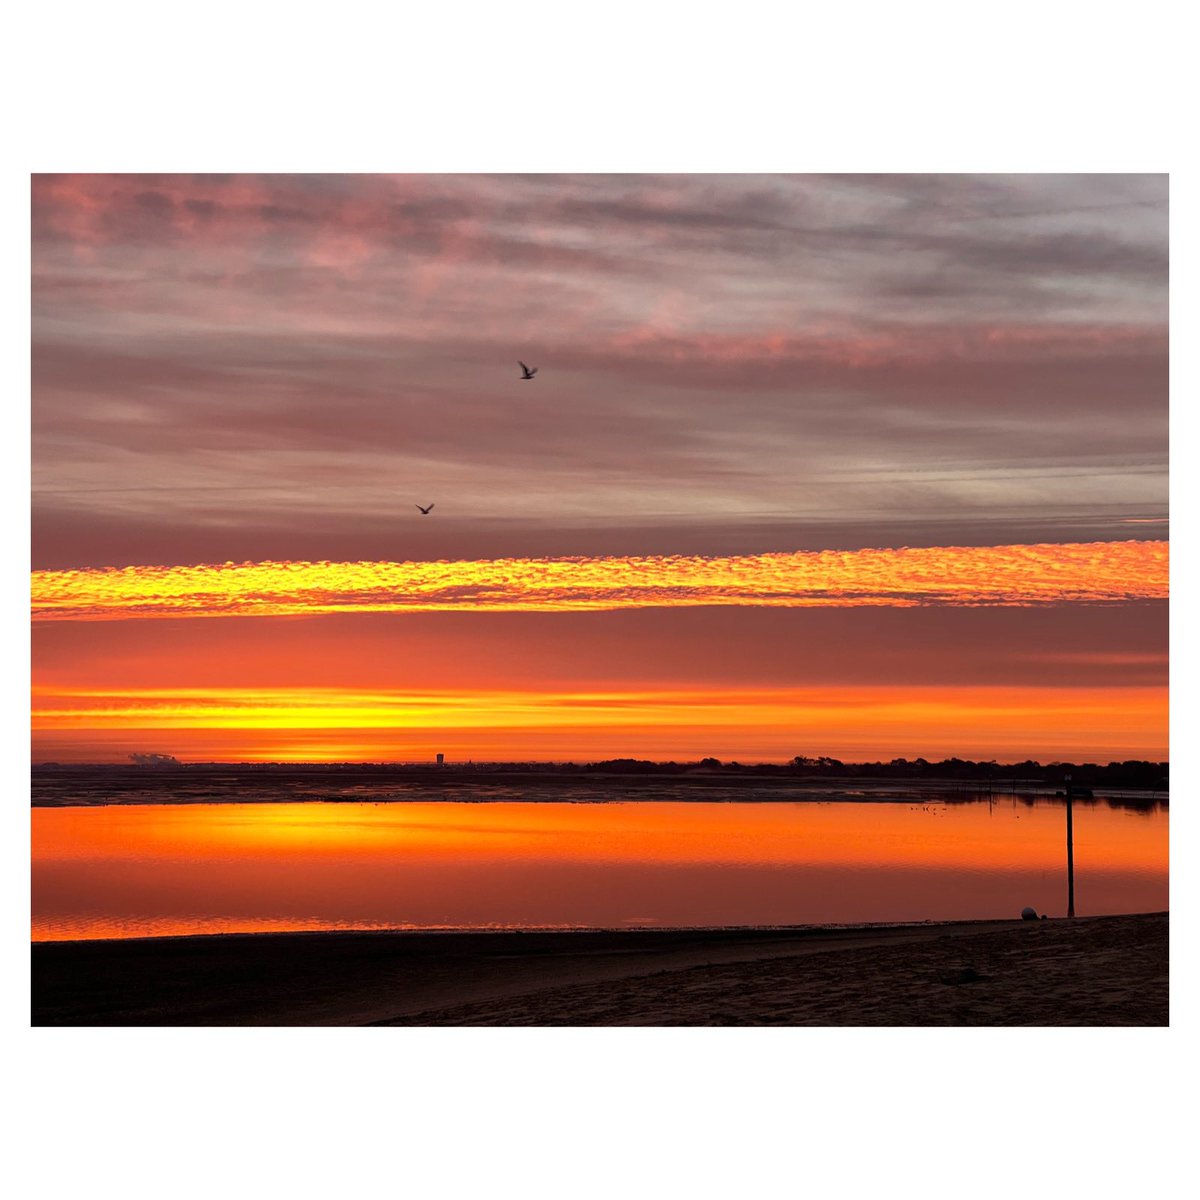 Morning 

#morningview #morninginspiration #sunrisephotography #sunrisesky #sunriseoftheday #igersfrance #sudouest #arcachon #bassindarcachon #bassinaddict #igersgironde #wipplay #reponsesphoto #lecrakoi #vivrelebassin #skyporn #skyphotography #skylovers #seascapes